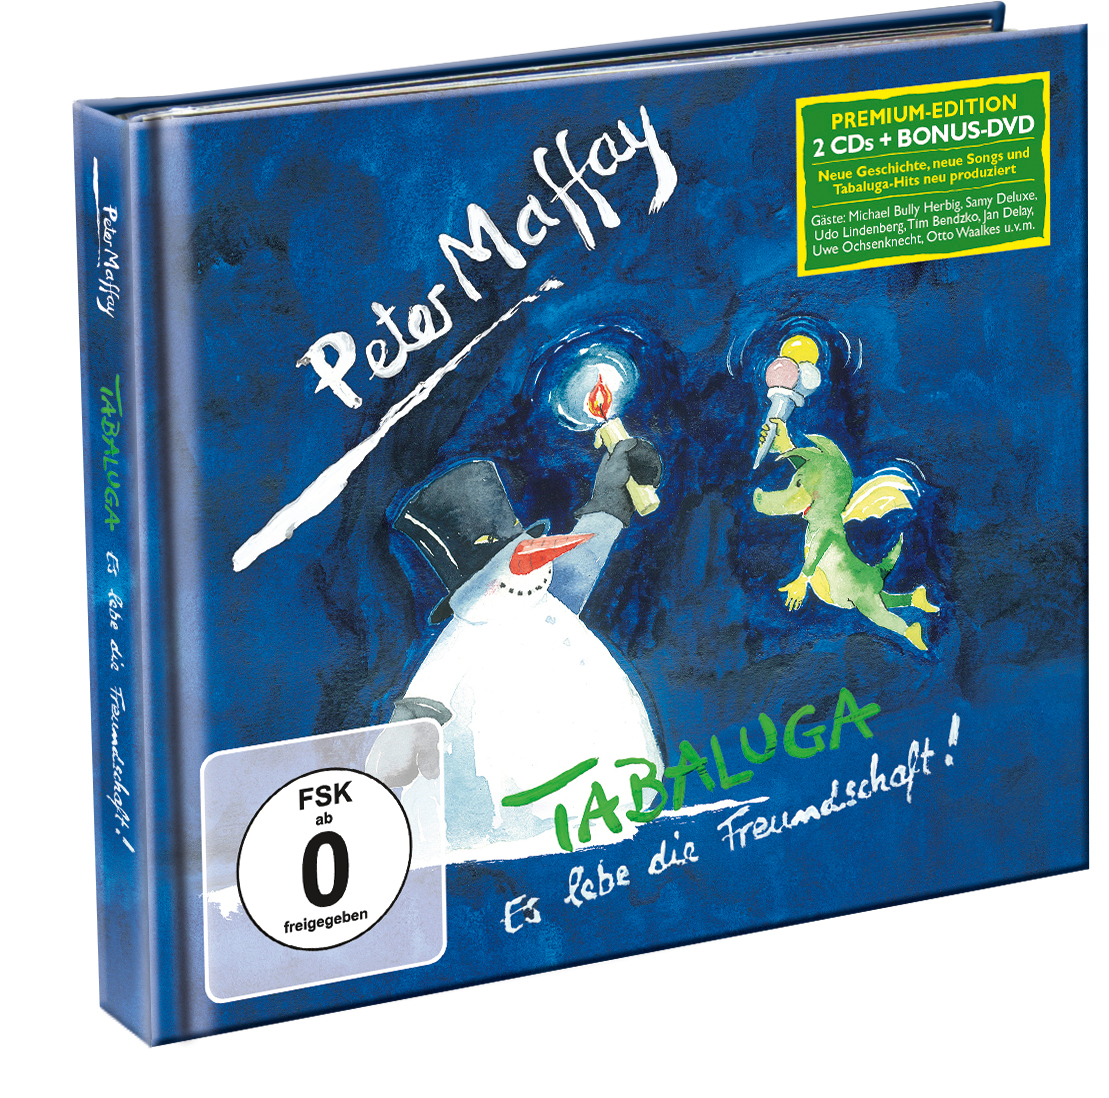 + Peter - Es (DVD die lebe - - Tabaluga CD) Maffay Freundschaft!